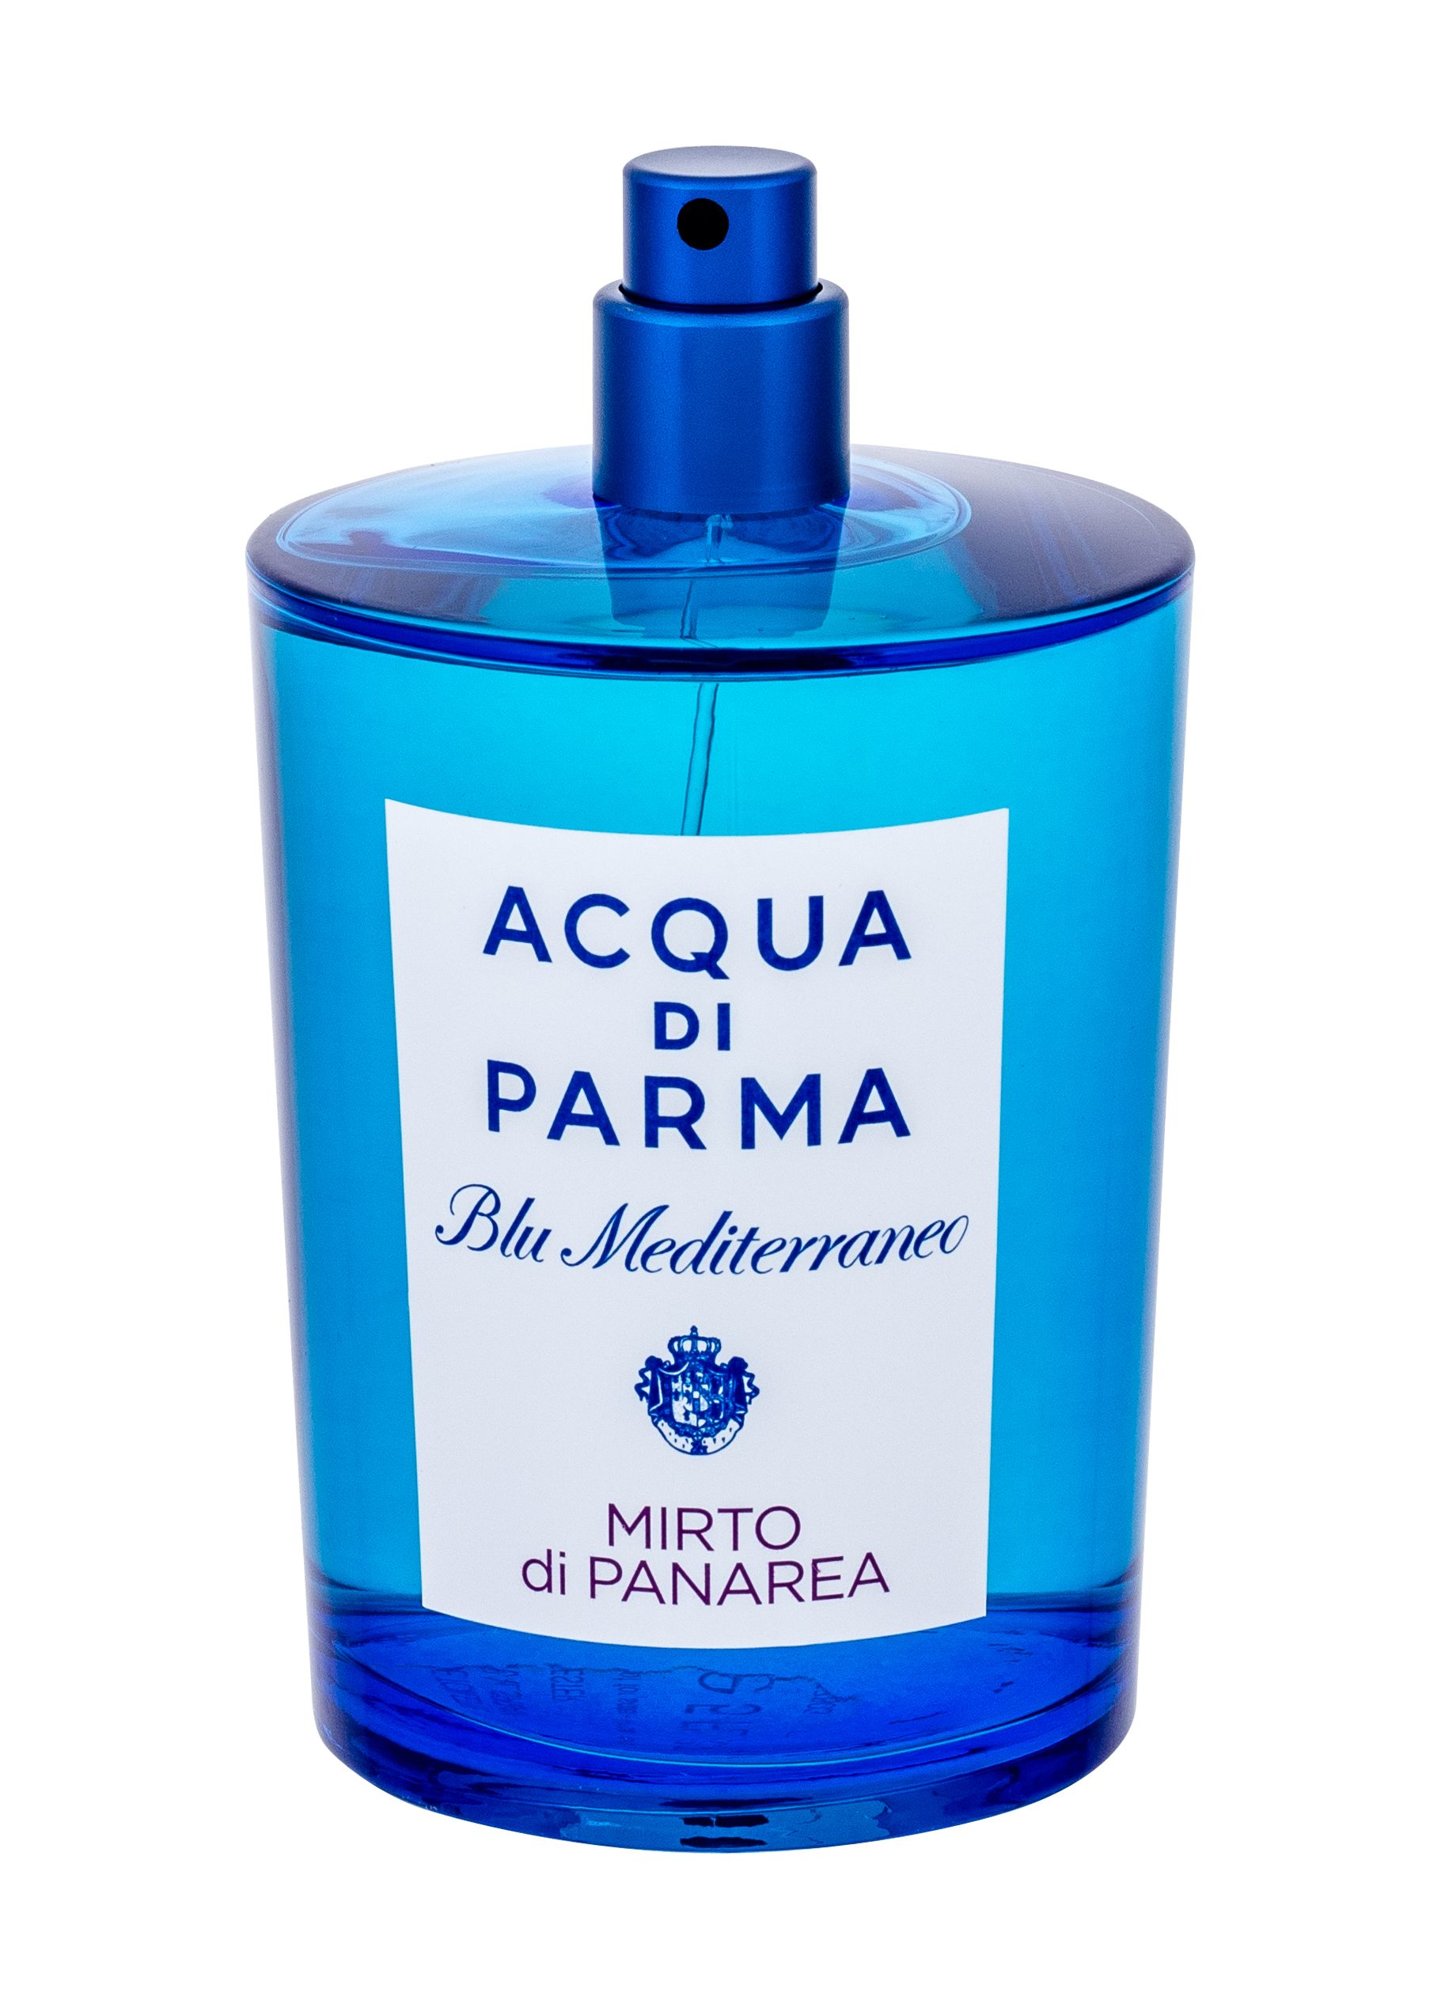 Acqua di Parma Blu Mediterraneo Mirto di Panarea, Toaletná voda 150ml, Tester